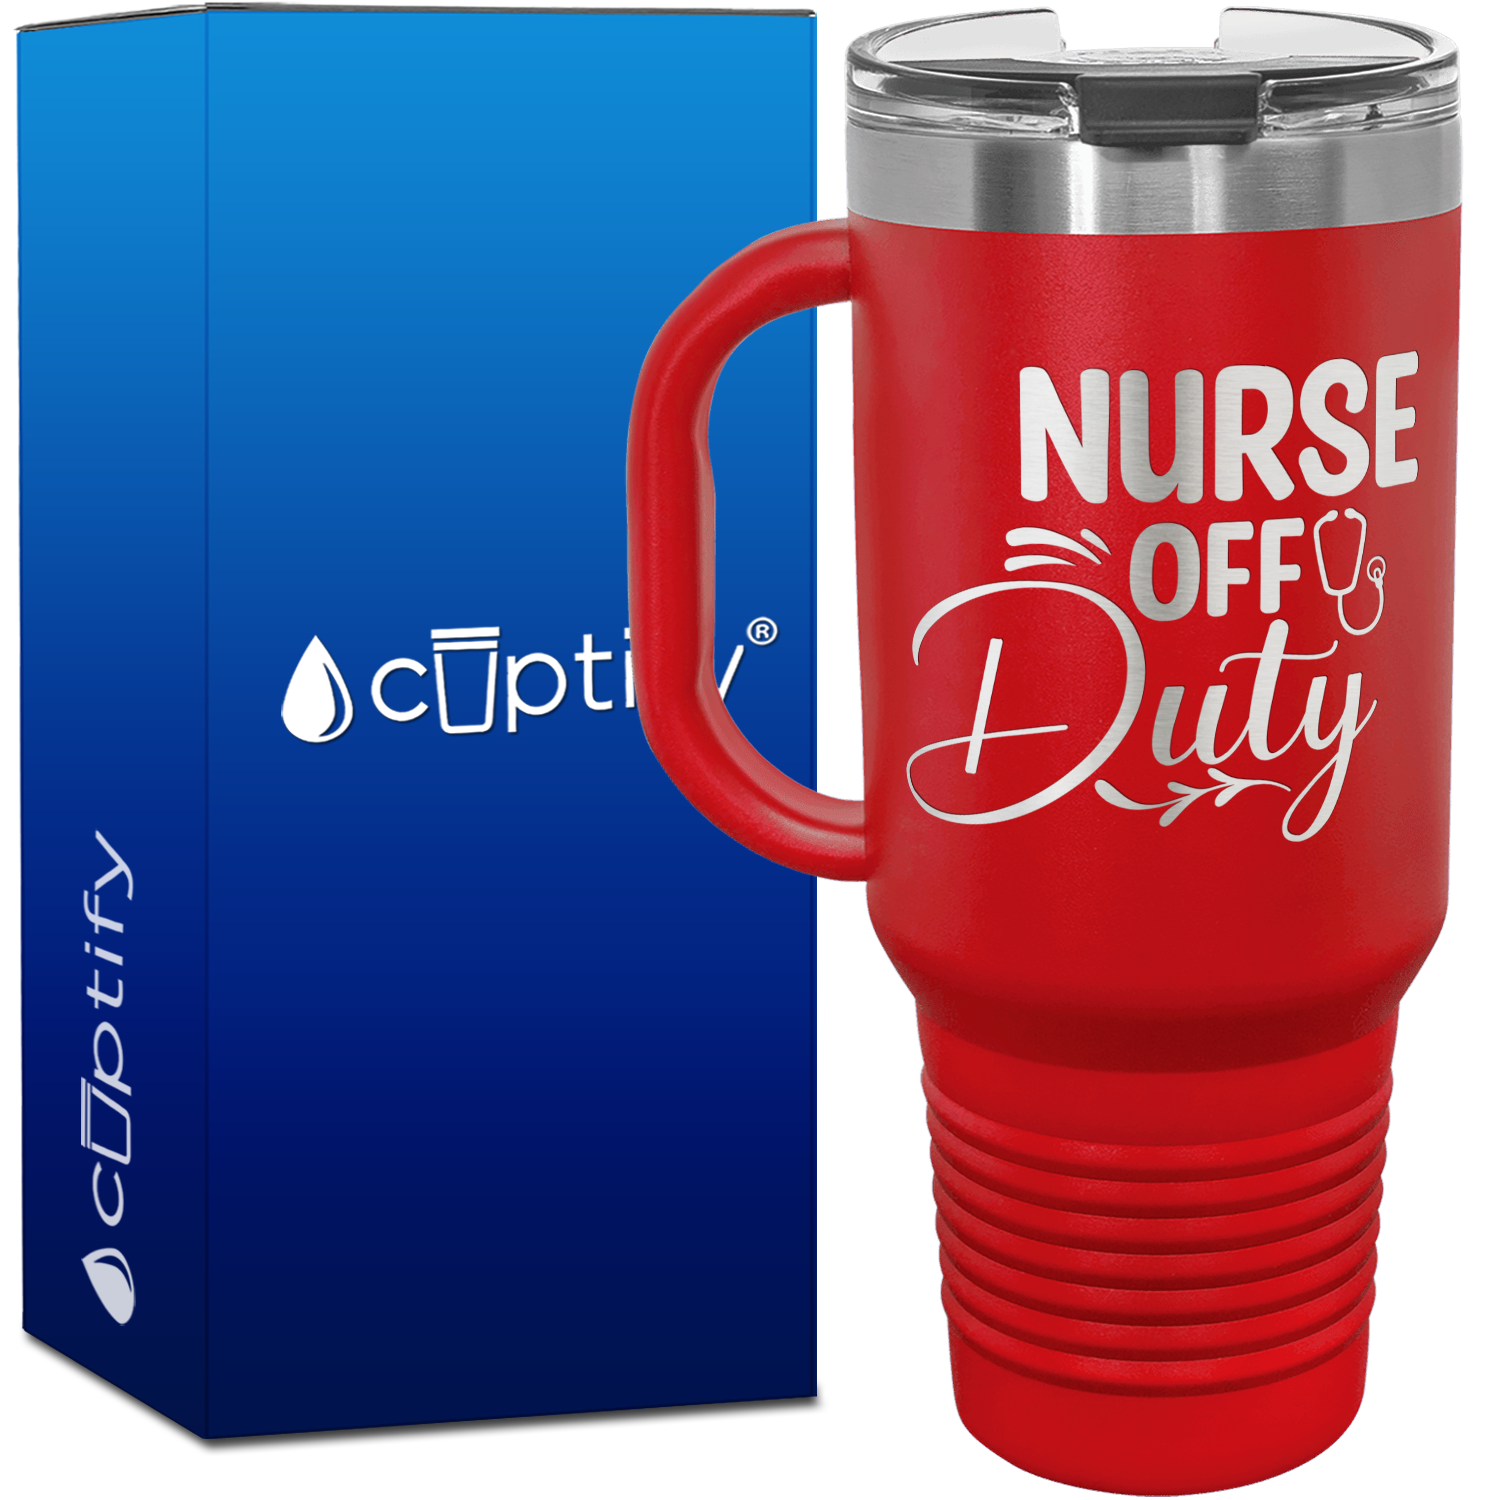 Nurse Off Duty 40oz Nurse Travel Mug